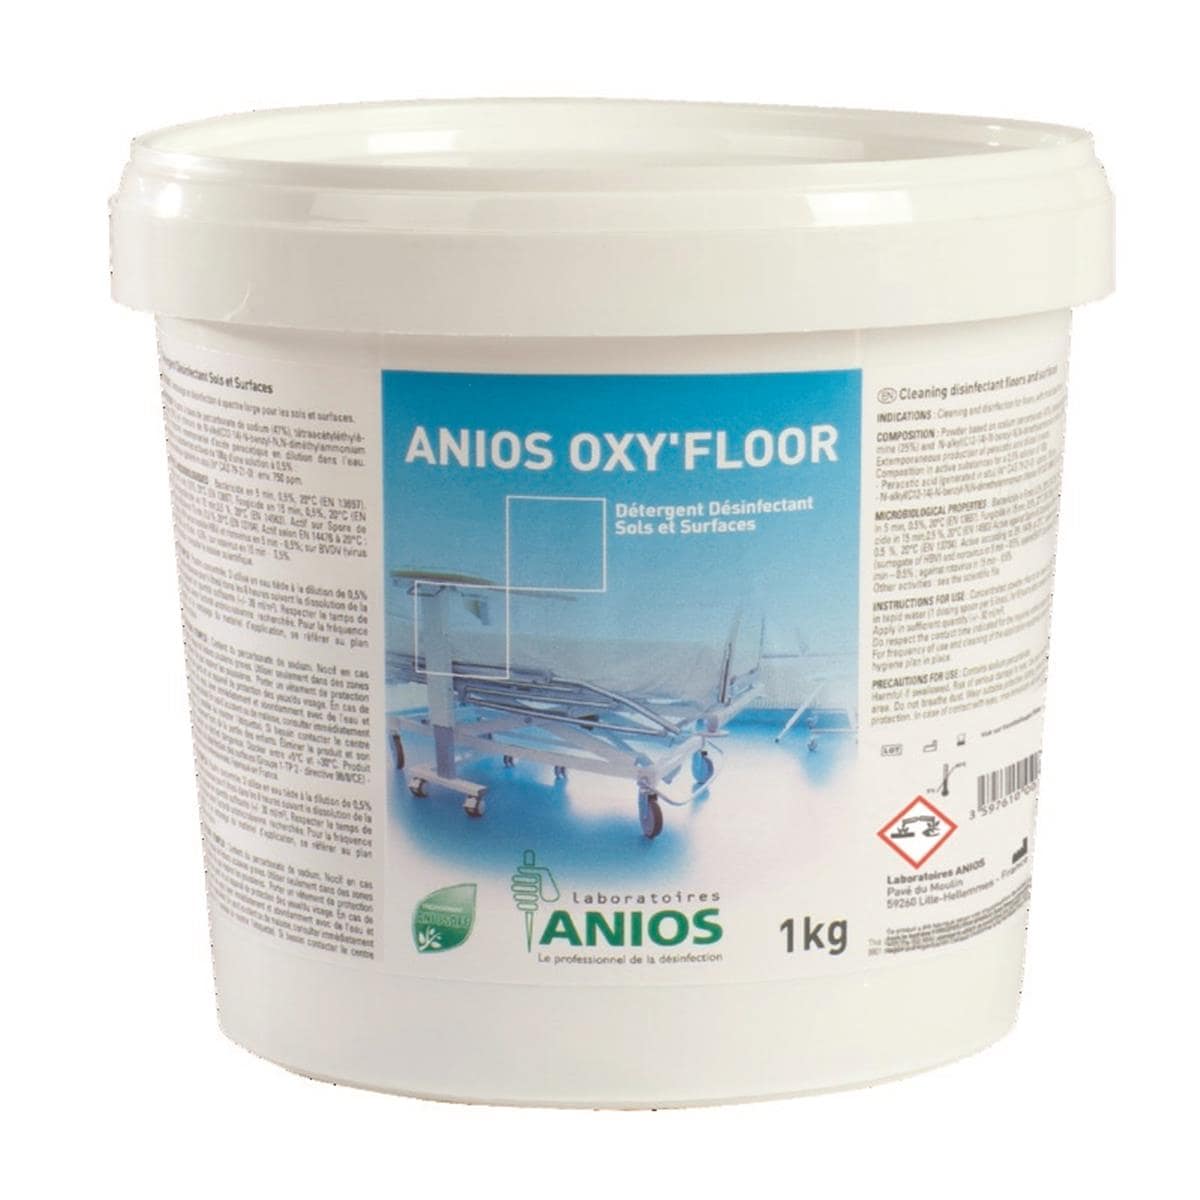 Detergent Oxy'floor - 4 Seaux x 1Kg - ANIOS